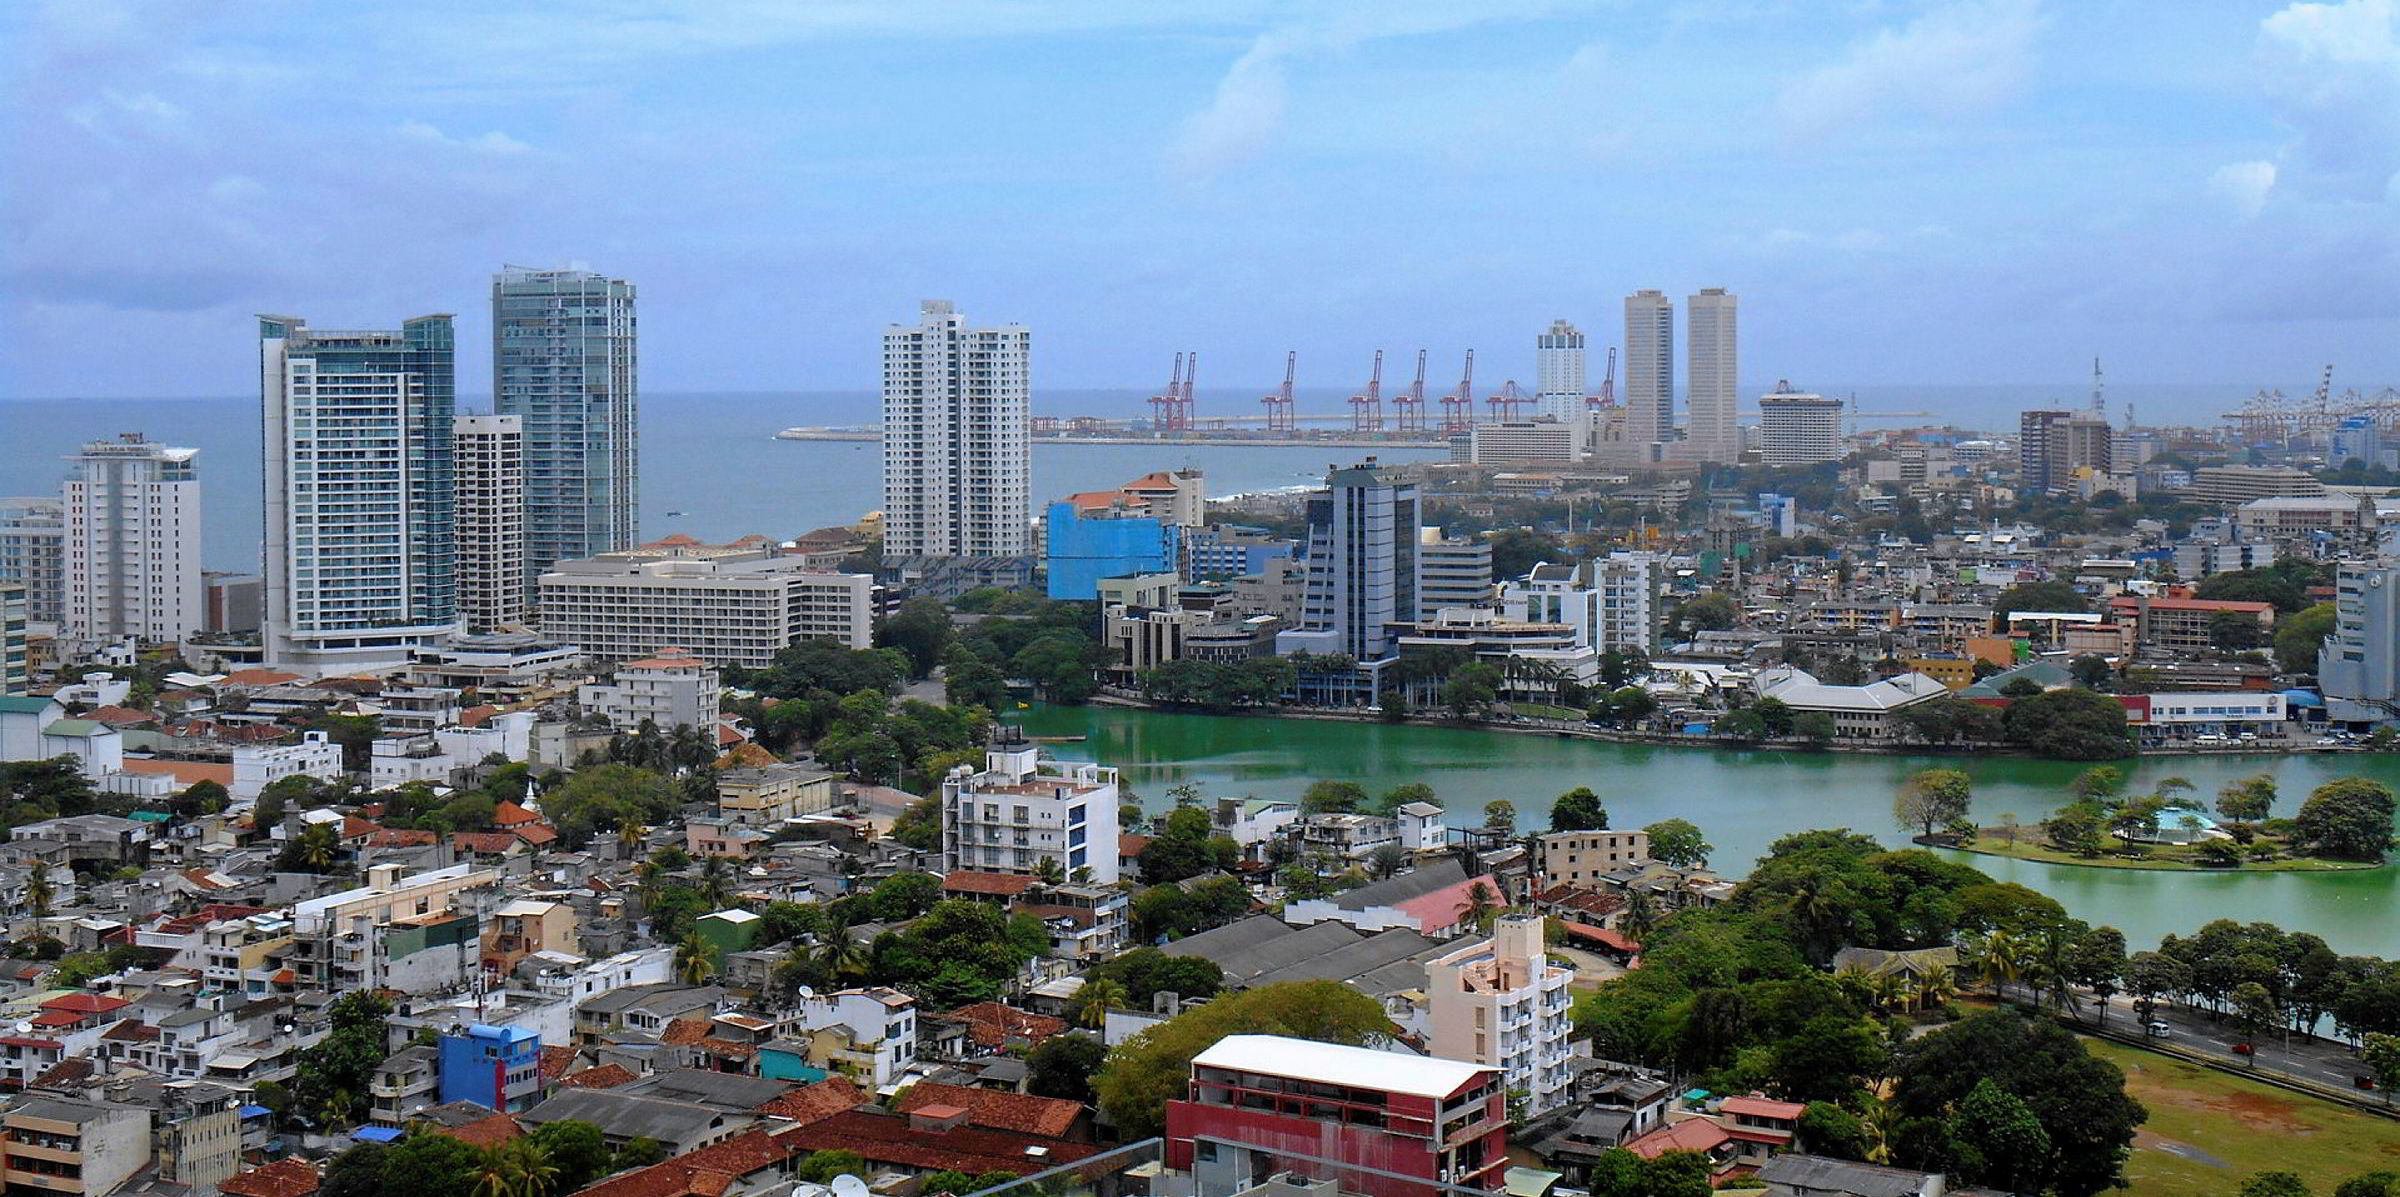 Погода коломбо шри ланка. Шри-Джаяварденепура-котте столица. Коломбо Шри Ланка. Шри Ланка столица Коломбо. Морской порт Коломбо Шри Ланка.